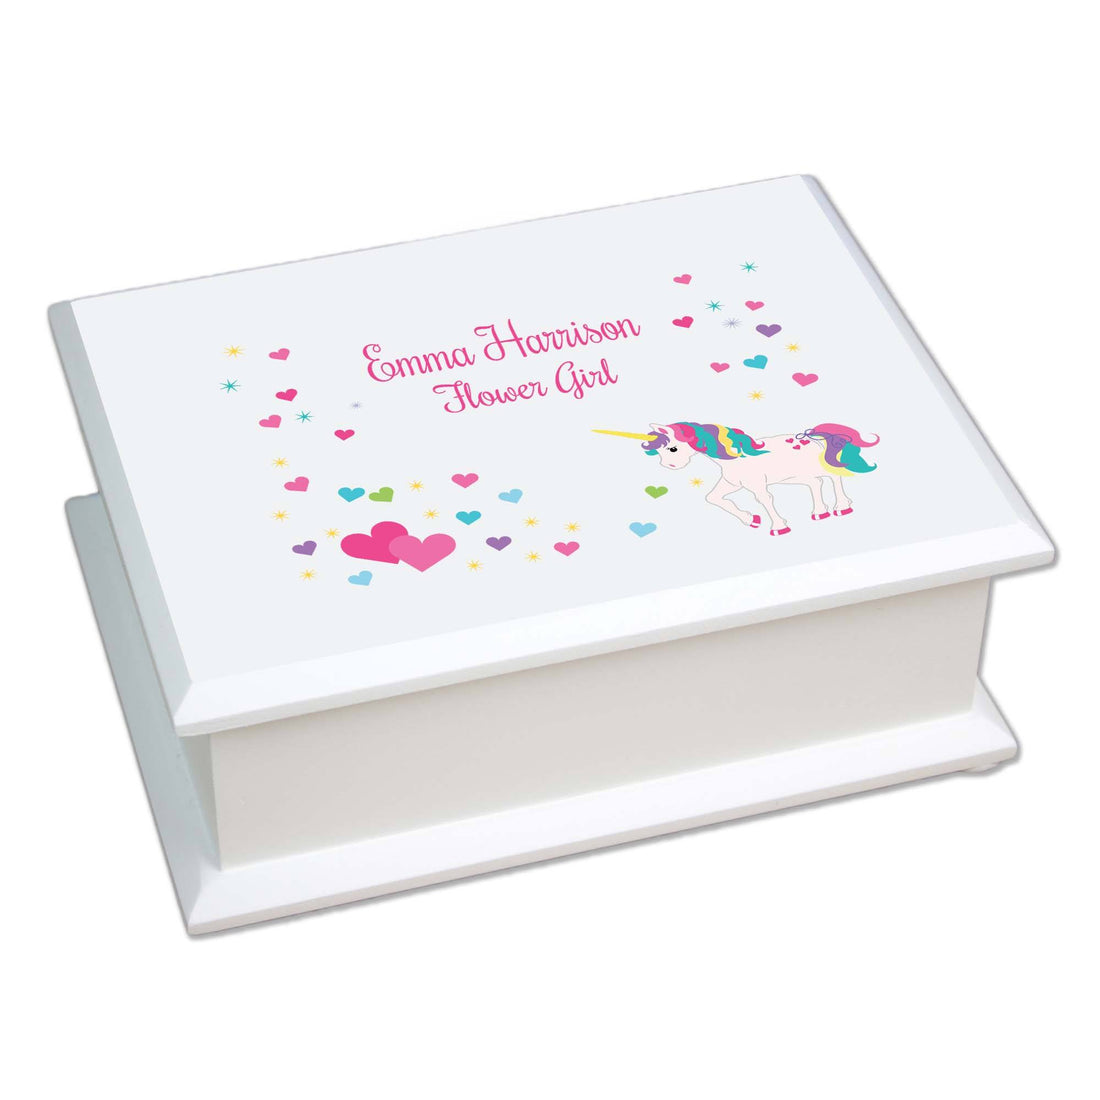 Personalized Lift Top Jewelry Box with Unicorn design